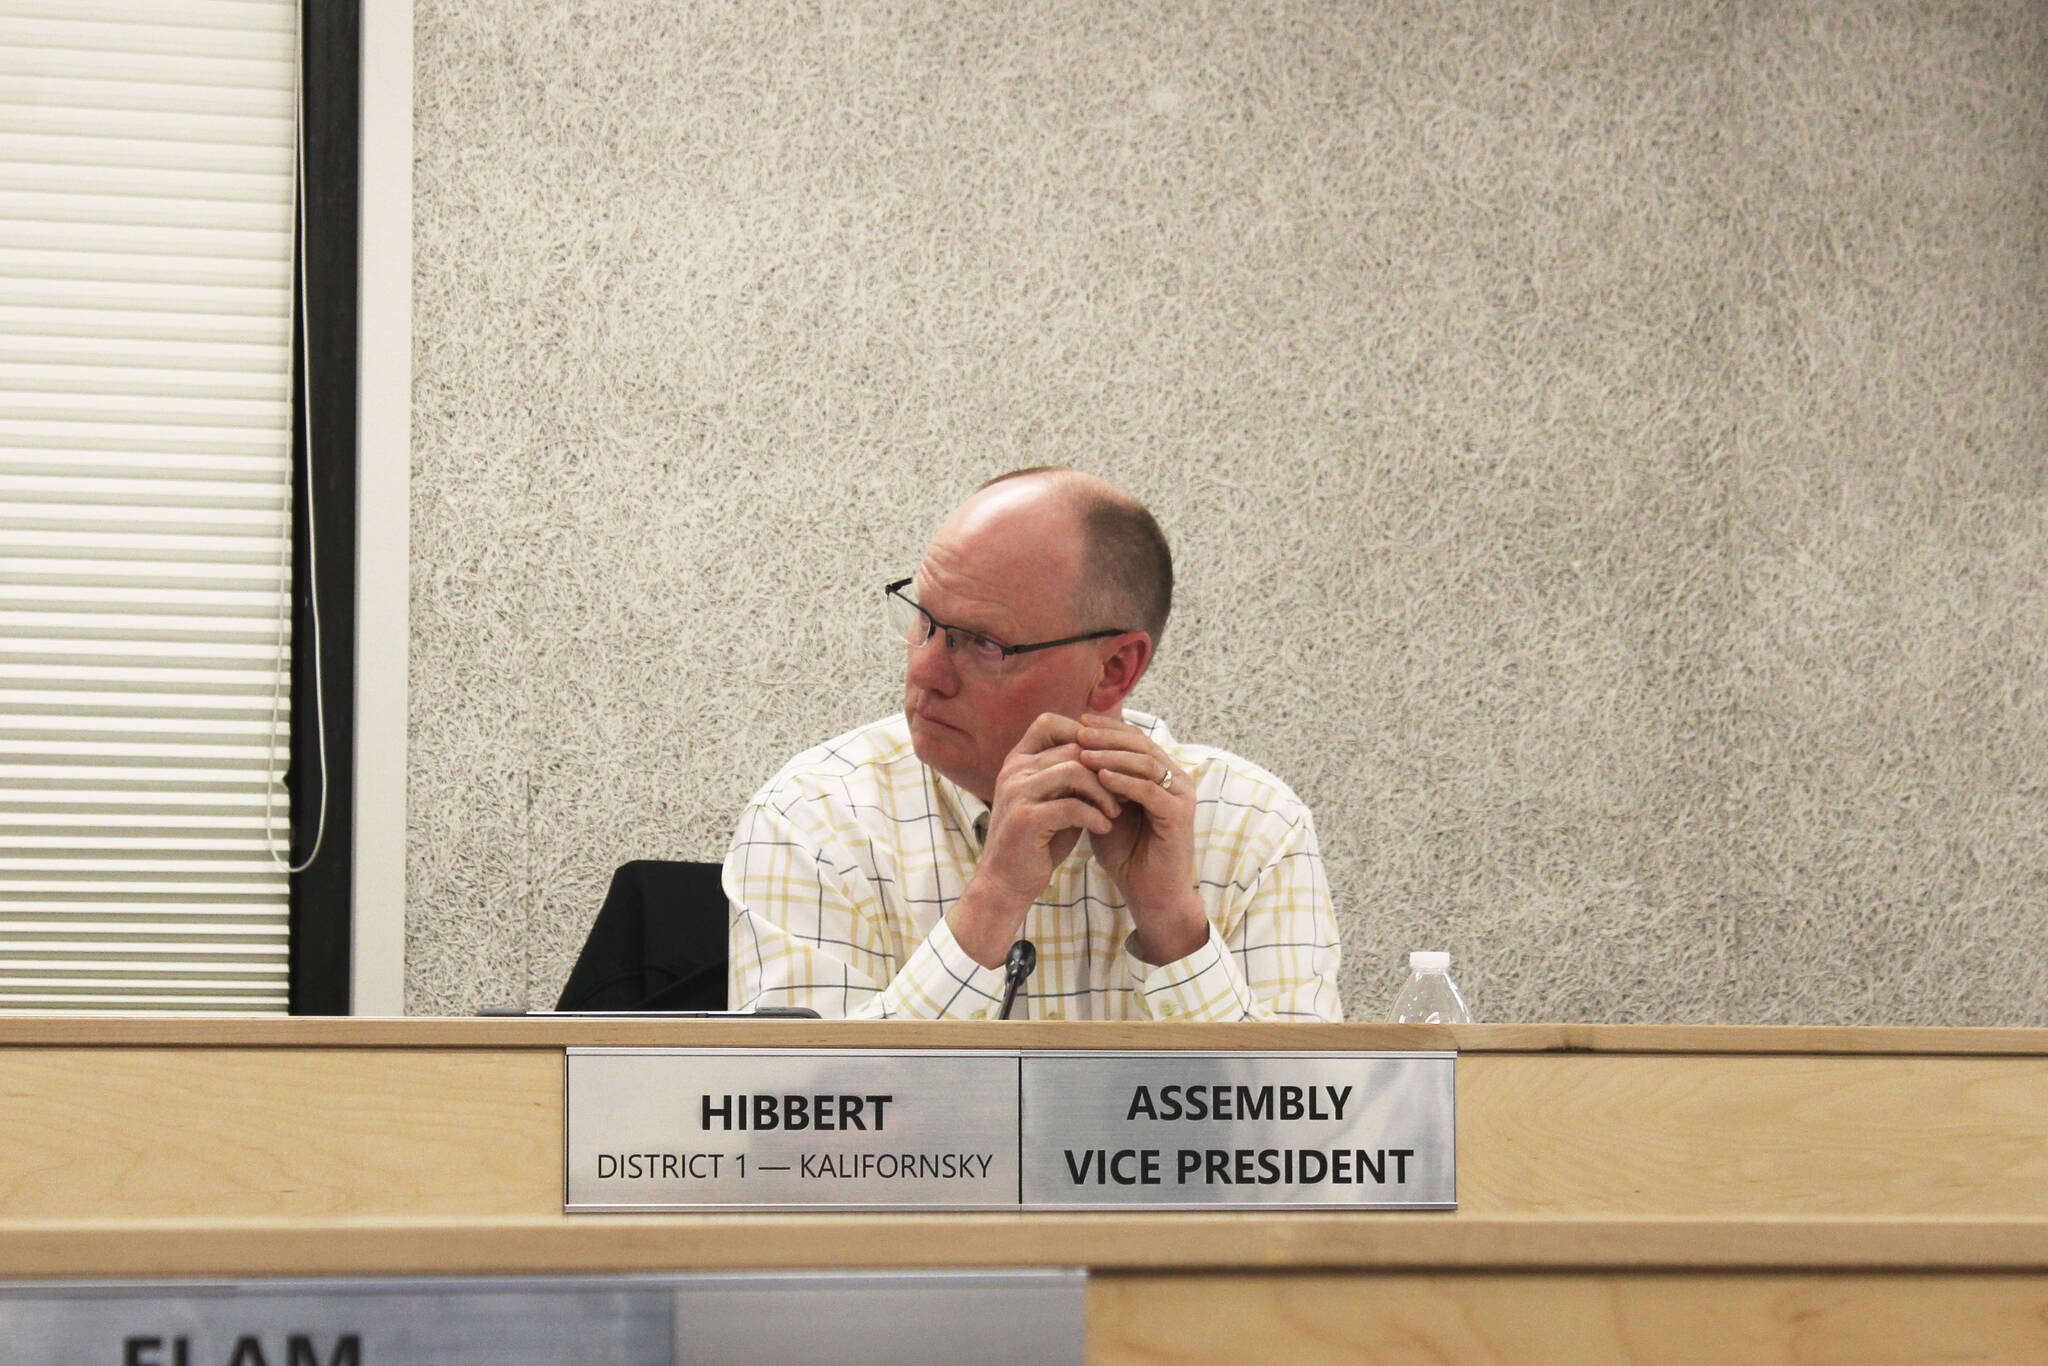 Assembly Vice President Brent Hibbert prepares to vote on legislation during a meeting of the Kenai Peninsula Borough Assembly on Tuesday, Dec. 7, 2021 in Soldotna, Alaska. (Ashlyn O’Hara/Peninsula Clarion)